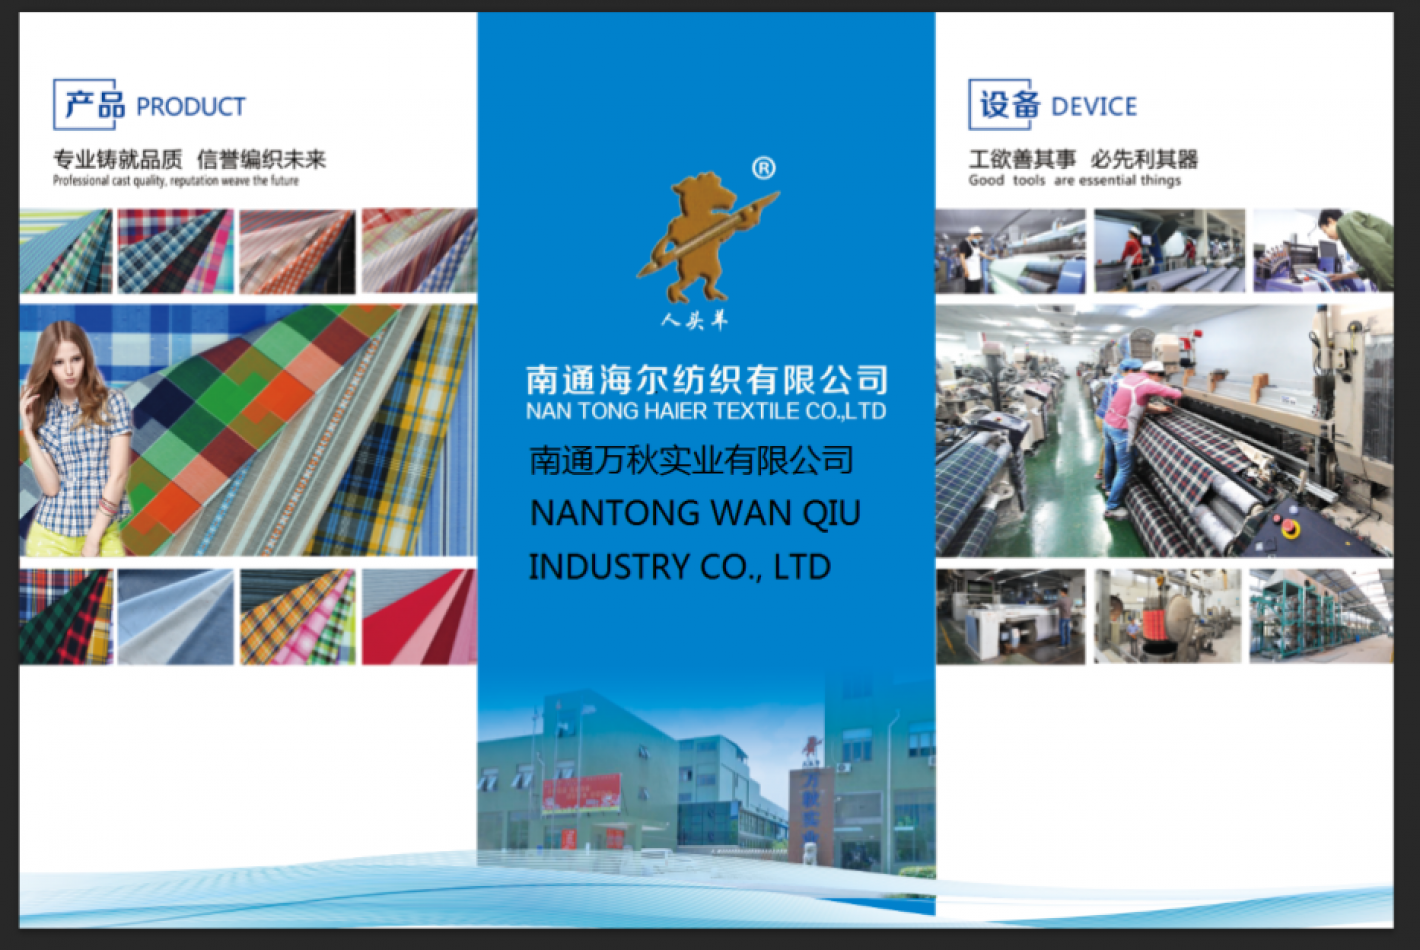 Nantong Wan Qiu Industry Co., Ltd